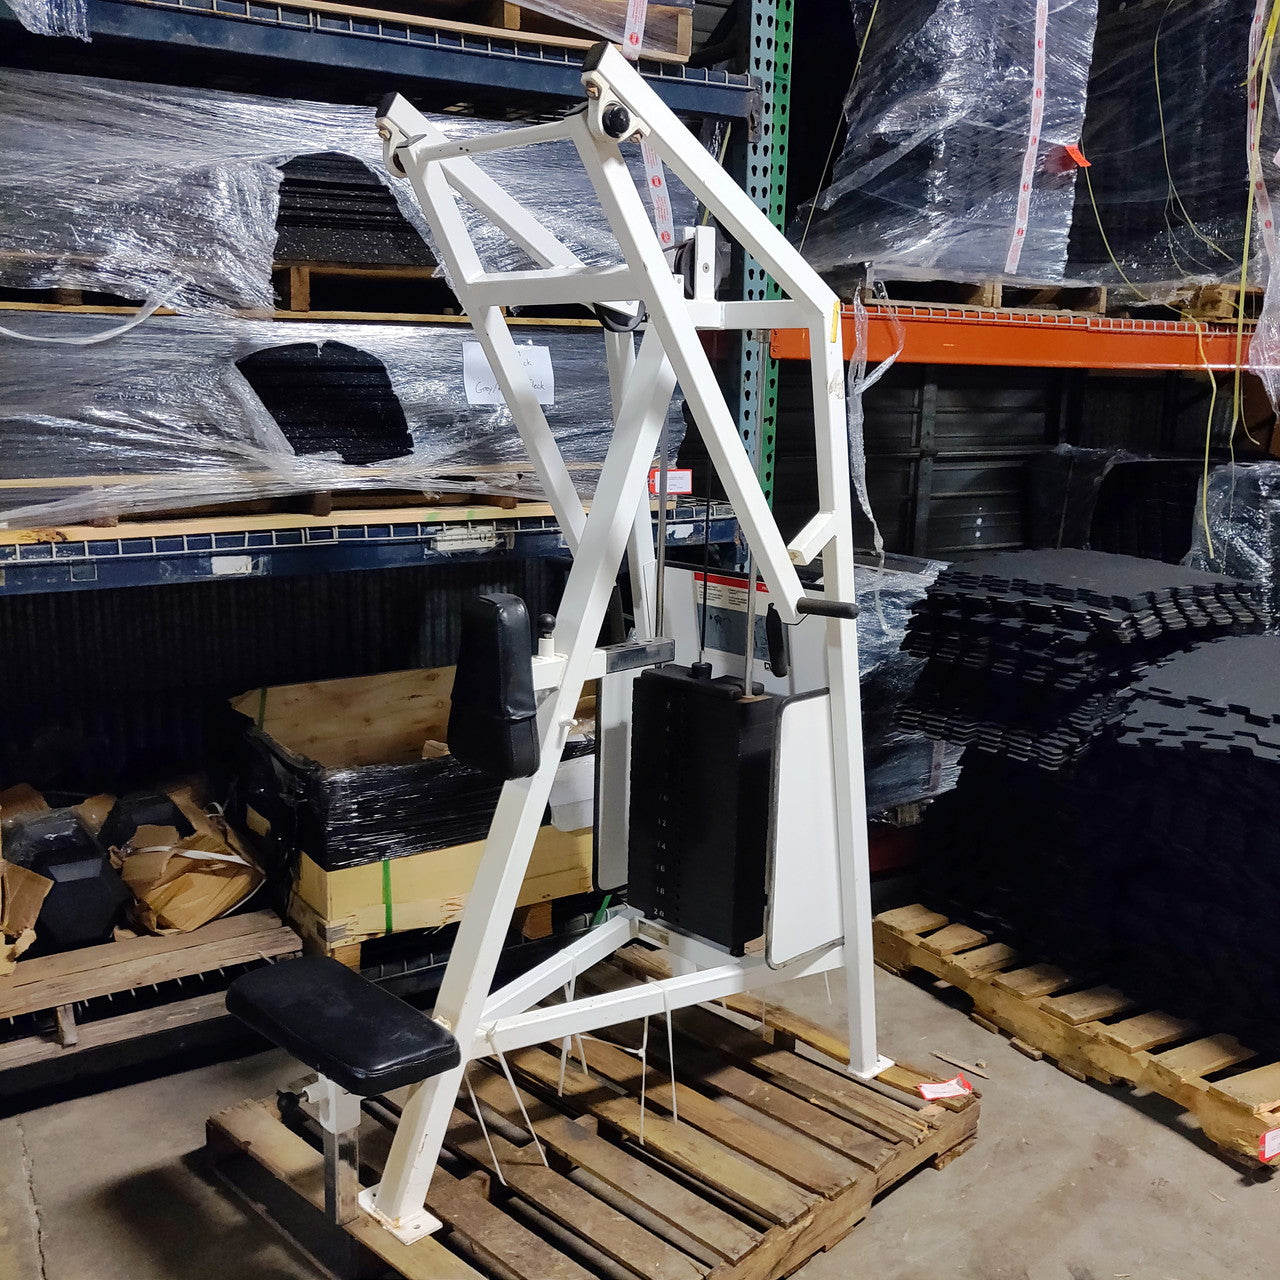 Cybex Row Machine with Heavy Duty Weight Stack